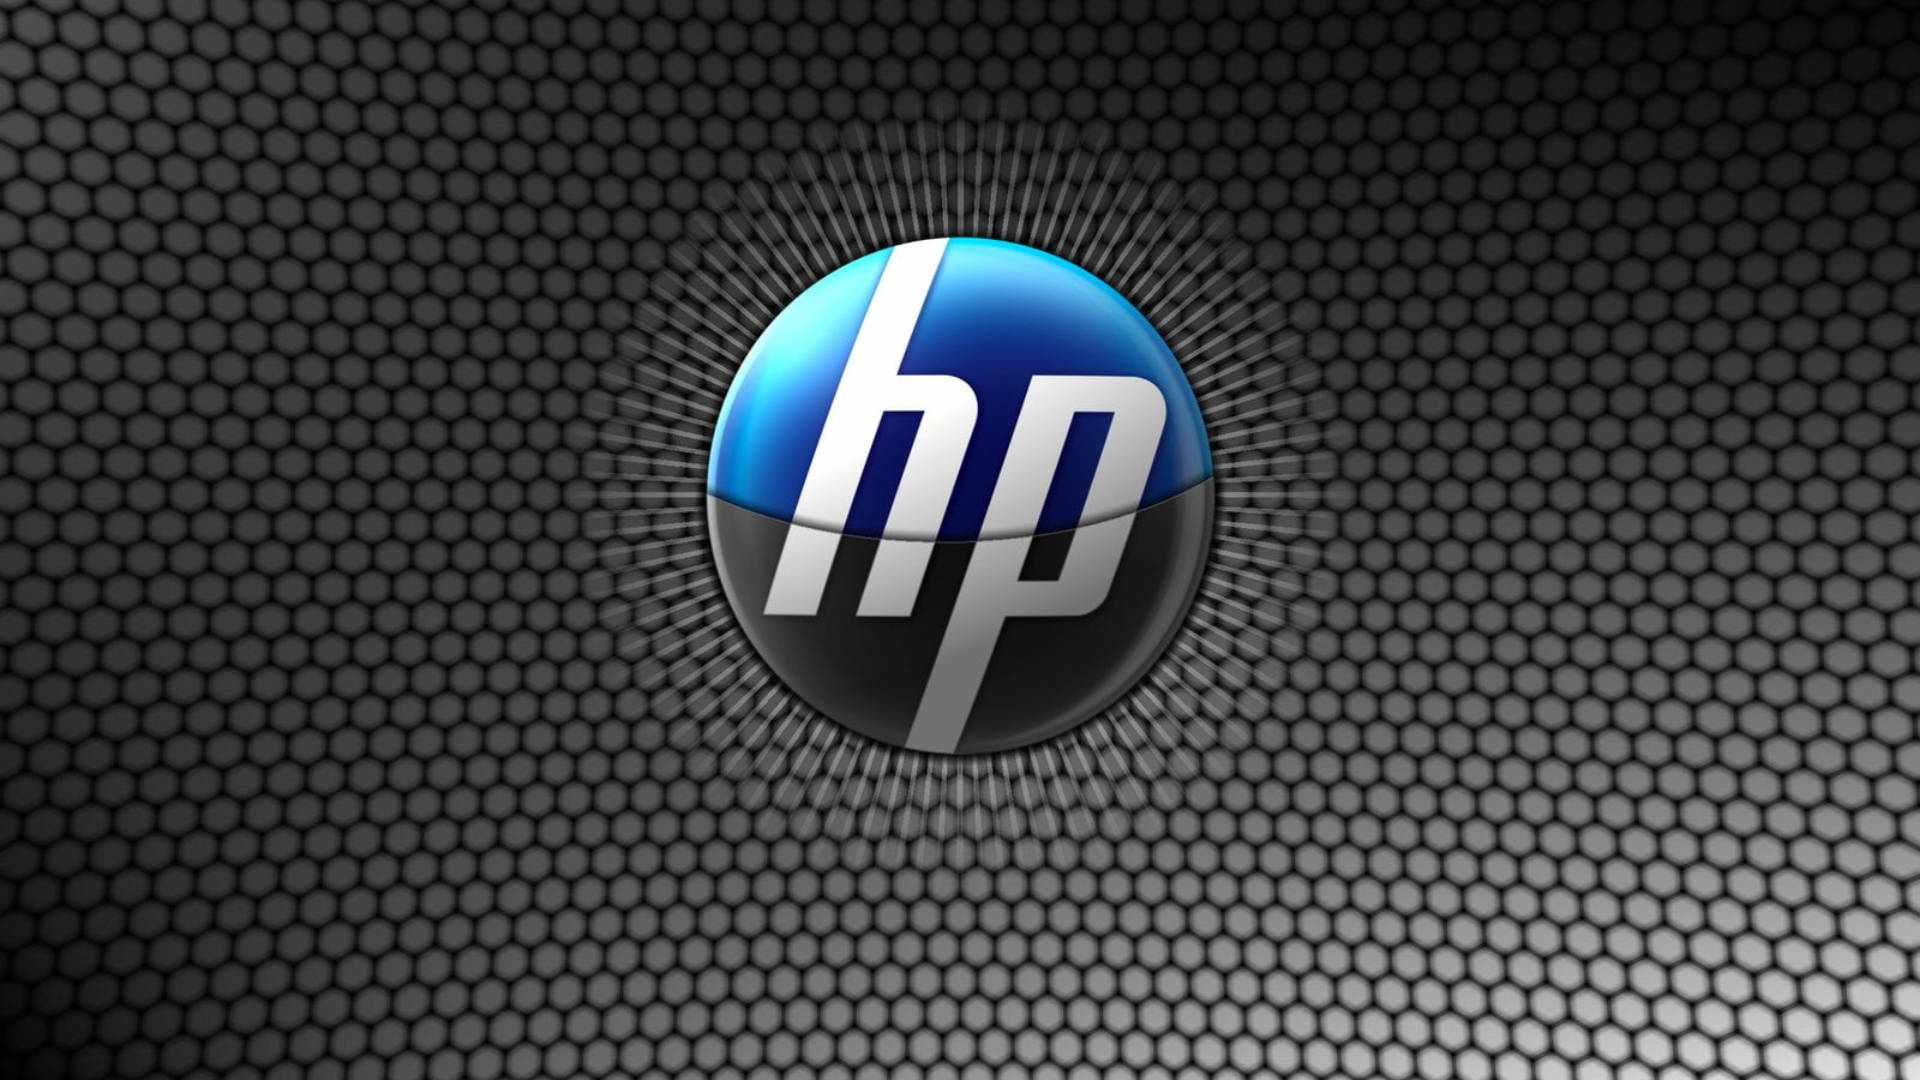 Hp Laptop Logo On Black Honeycomb Background